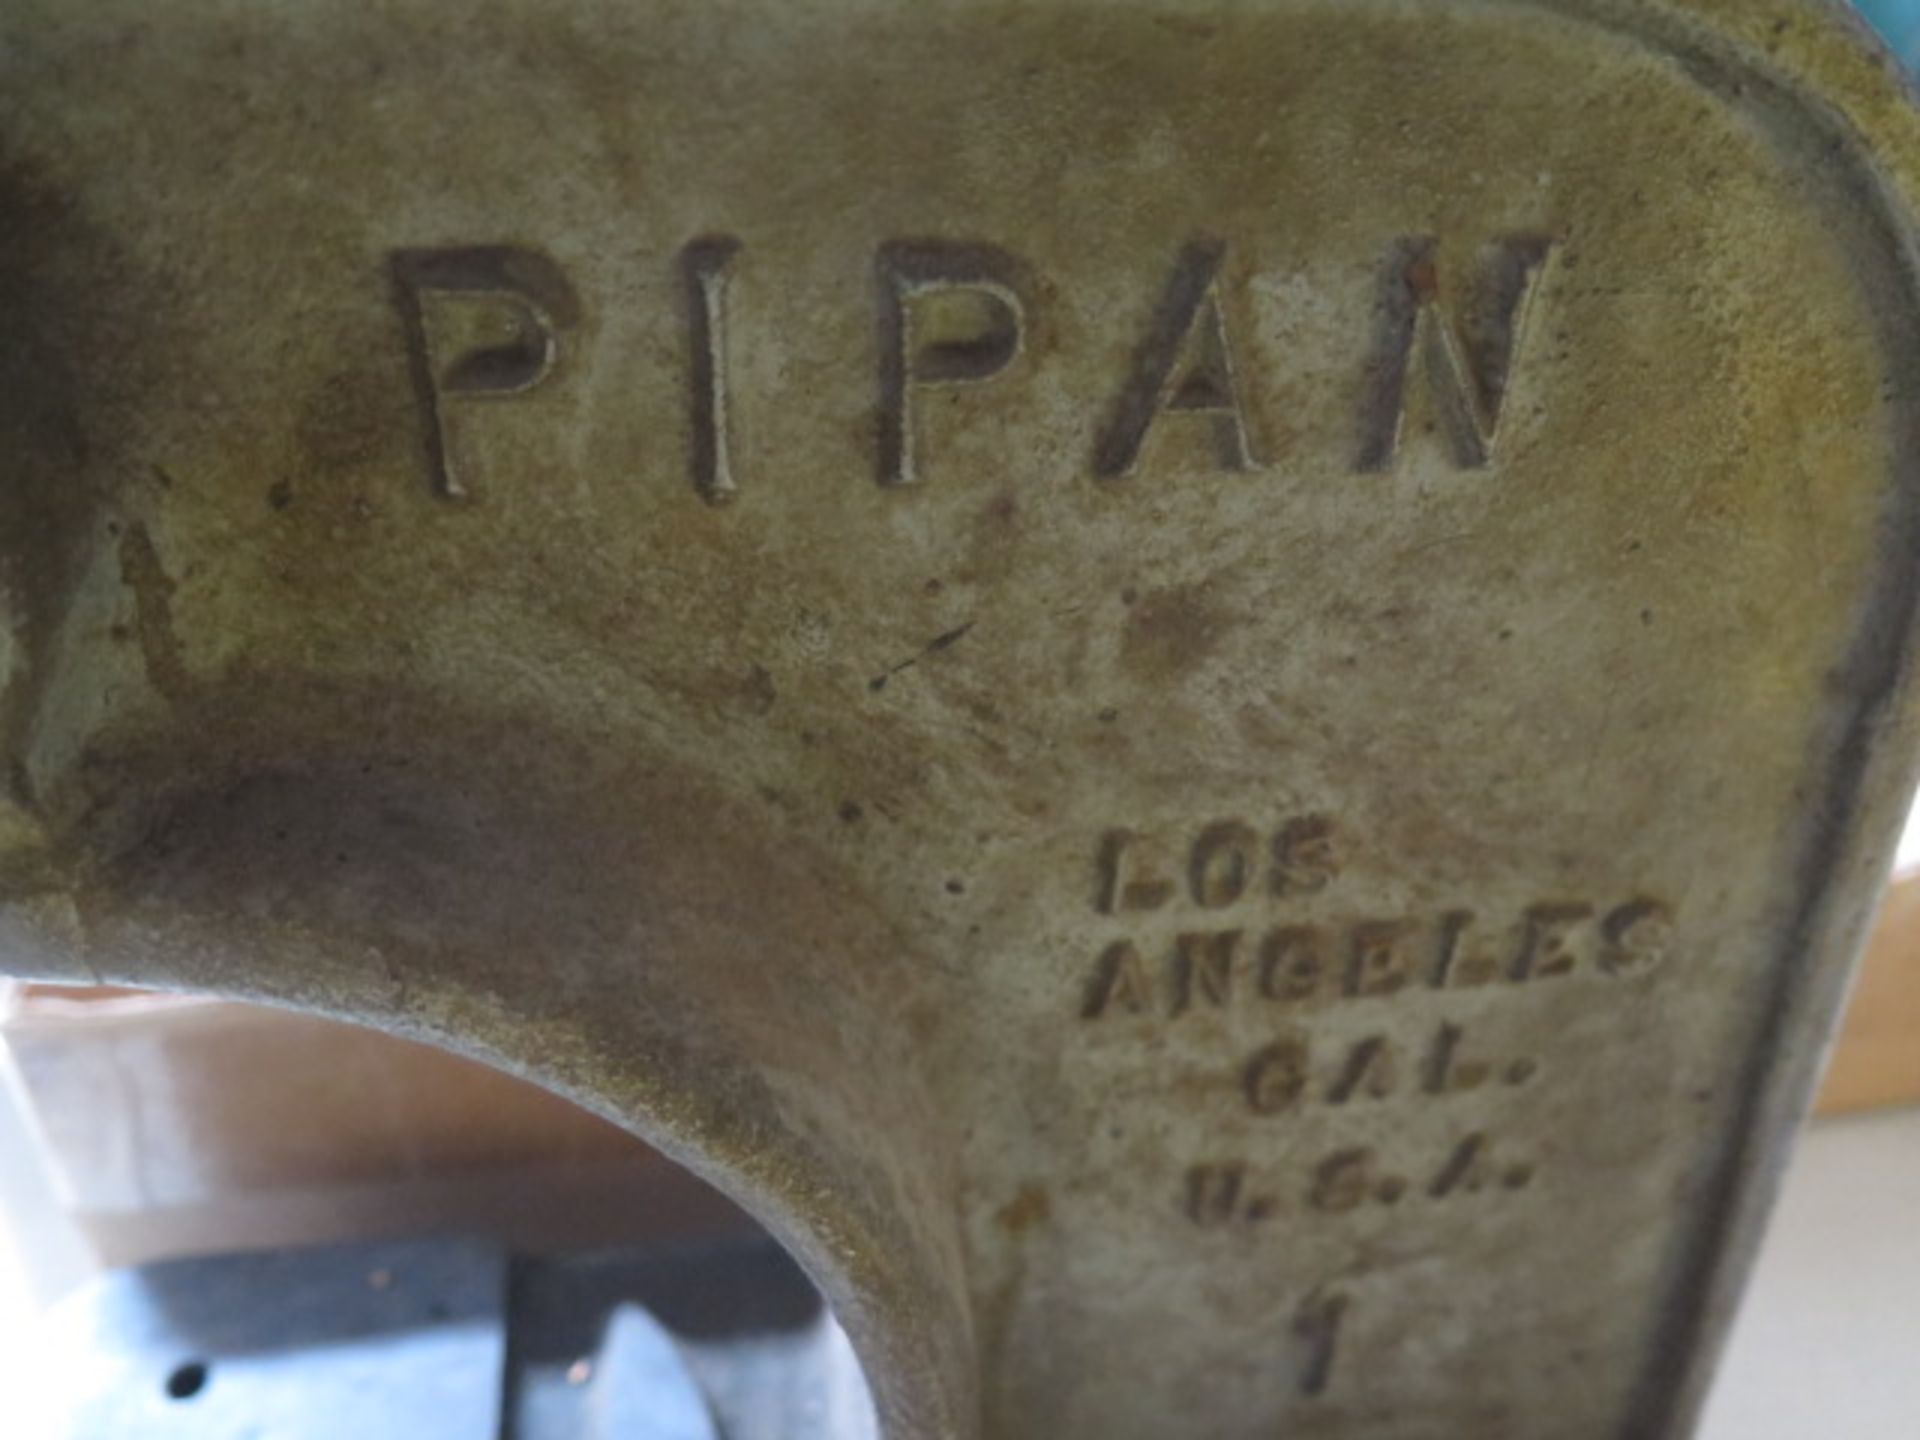 Pipan Arbor Press - Image 3 of 3